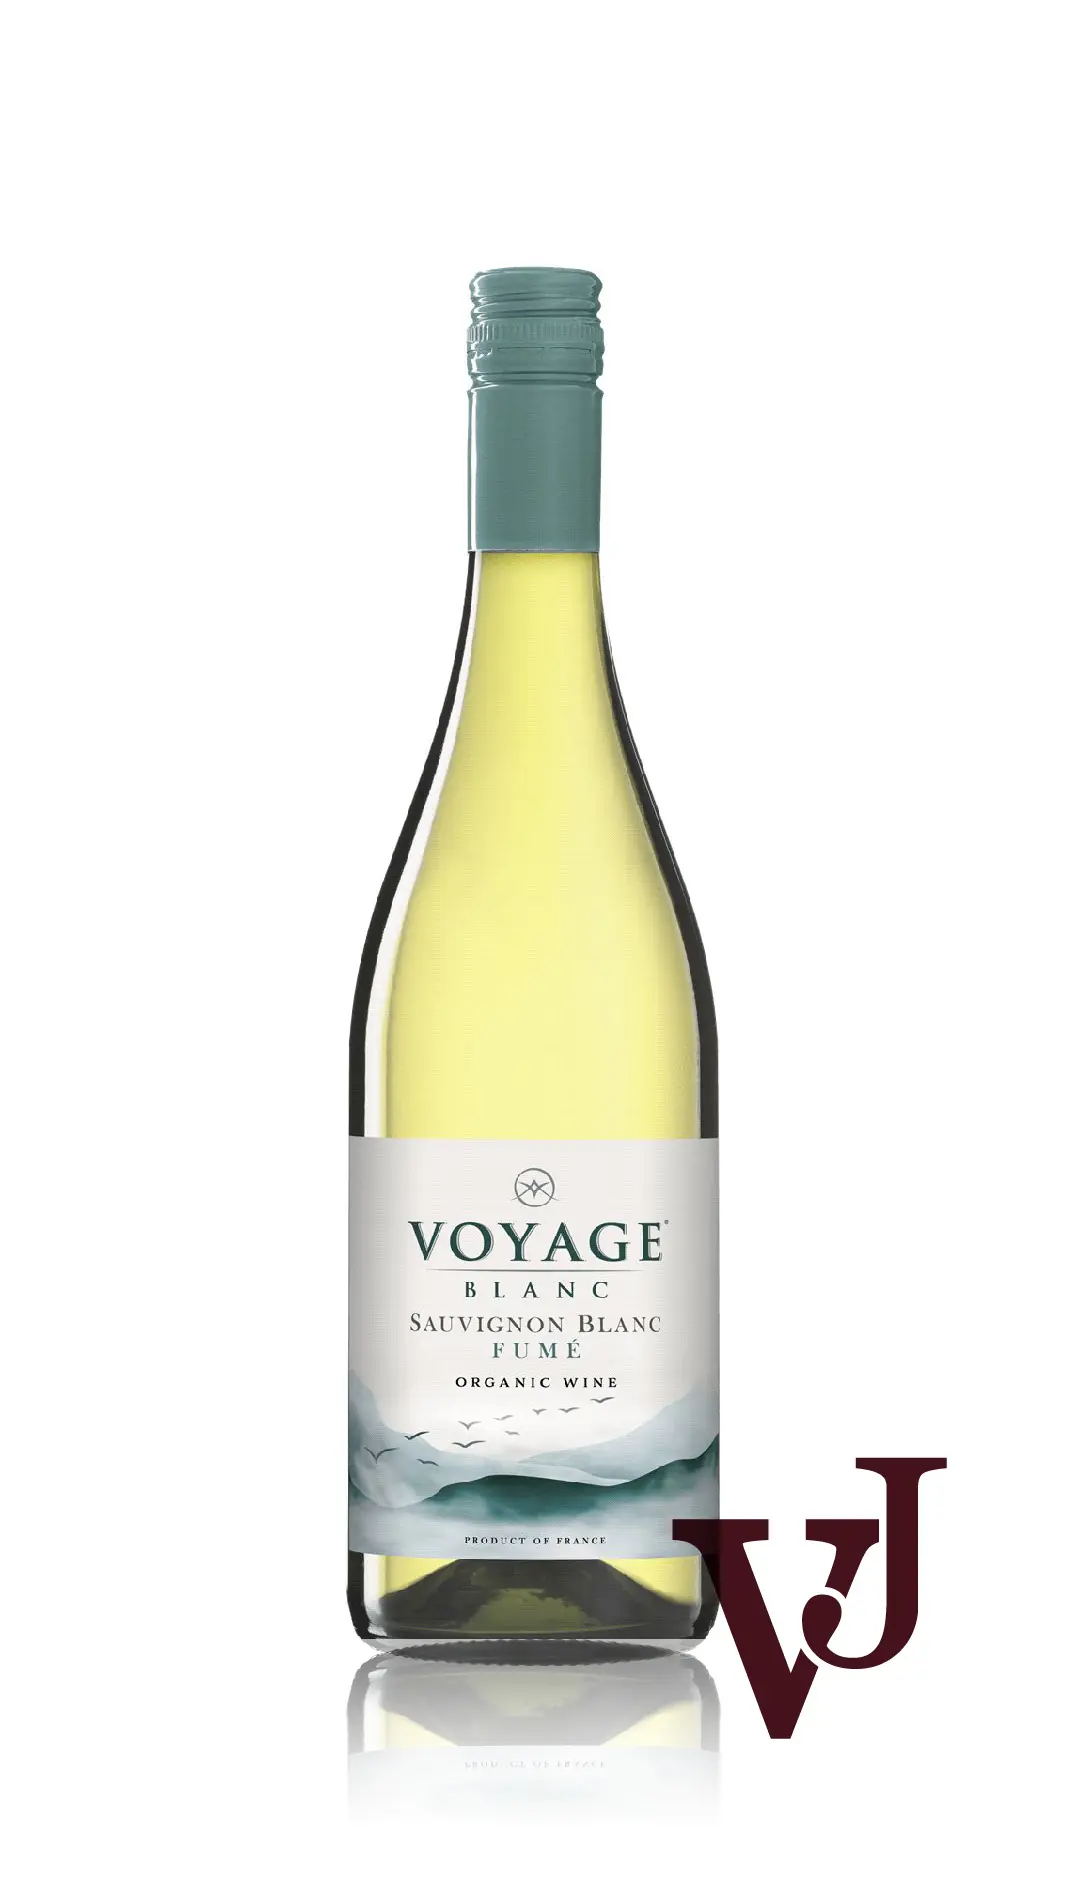 Vitt Vin - Voyage Blanc Sauvignon Blanc Fumé 2022 artikel nummer 115201 från producenten Couleurs d'Aquitaine från området Frankrike - Vinjournalen.se